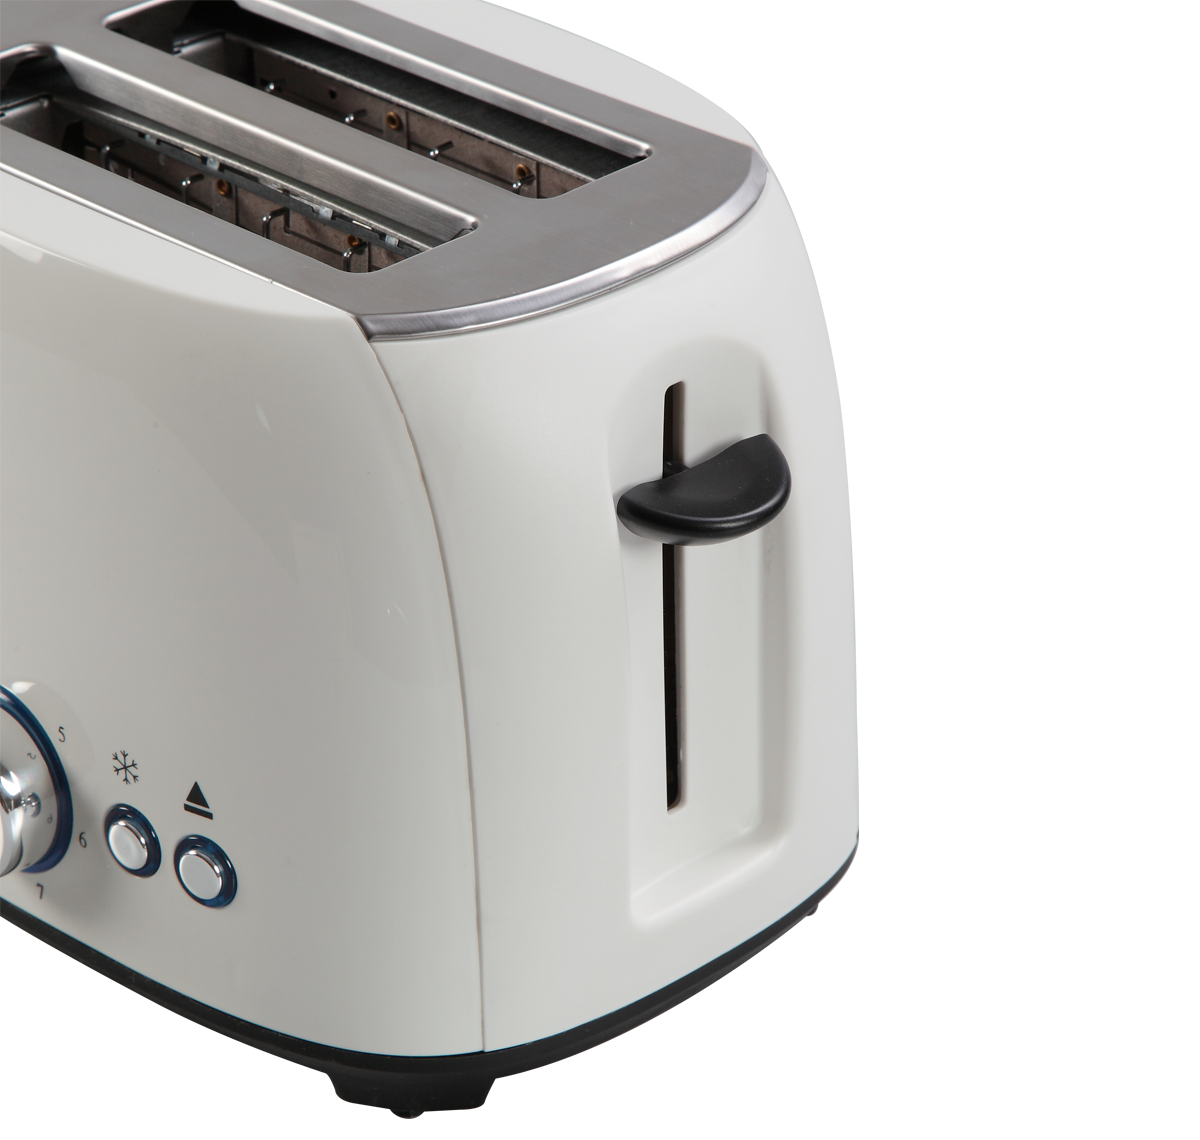 Pop up toaster (CRUST POP-UP TOASTER)